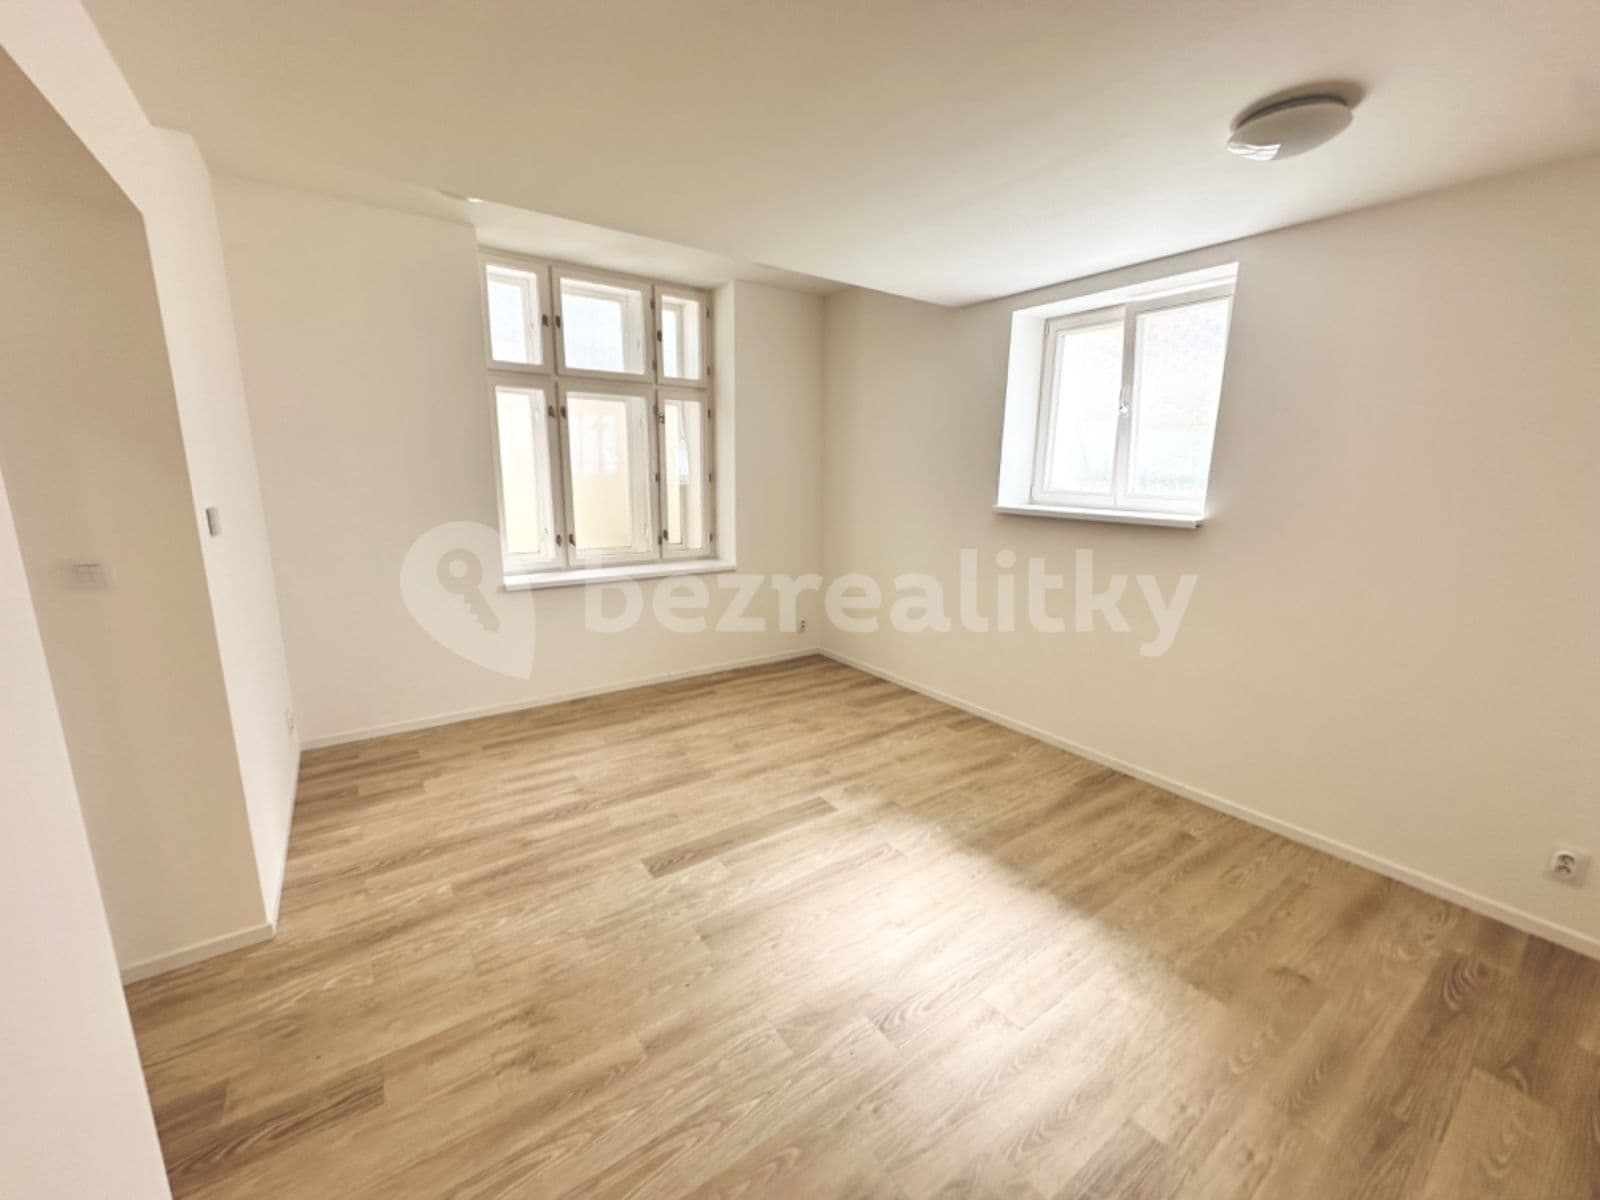 1 bedroom with open-plan kitchen flat for sale, 41 m², Svornosti, Prague, Prague